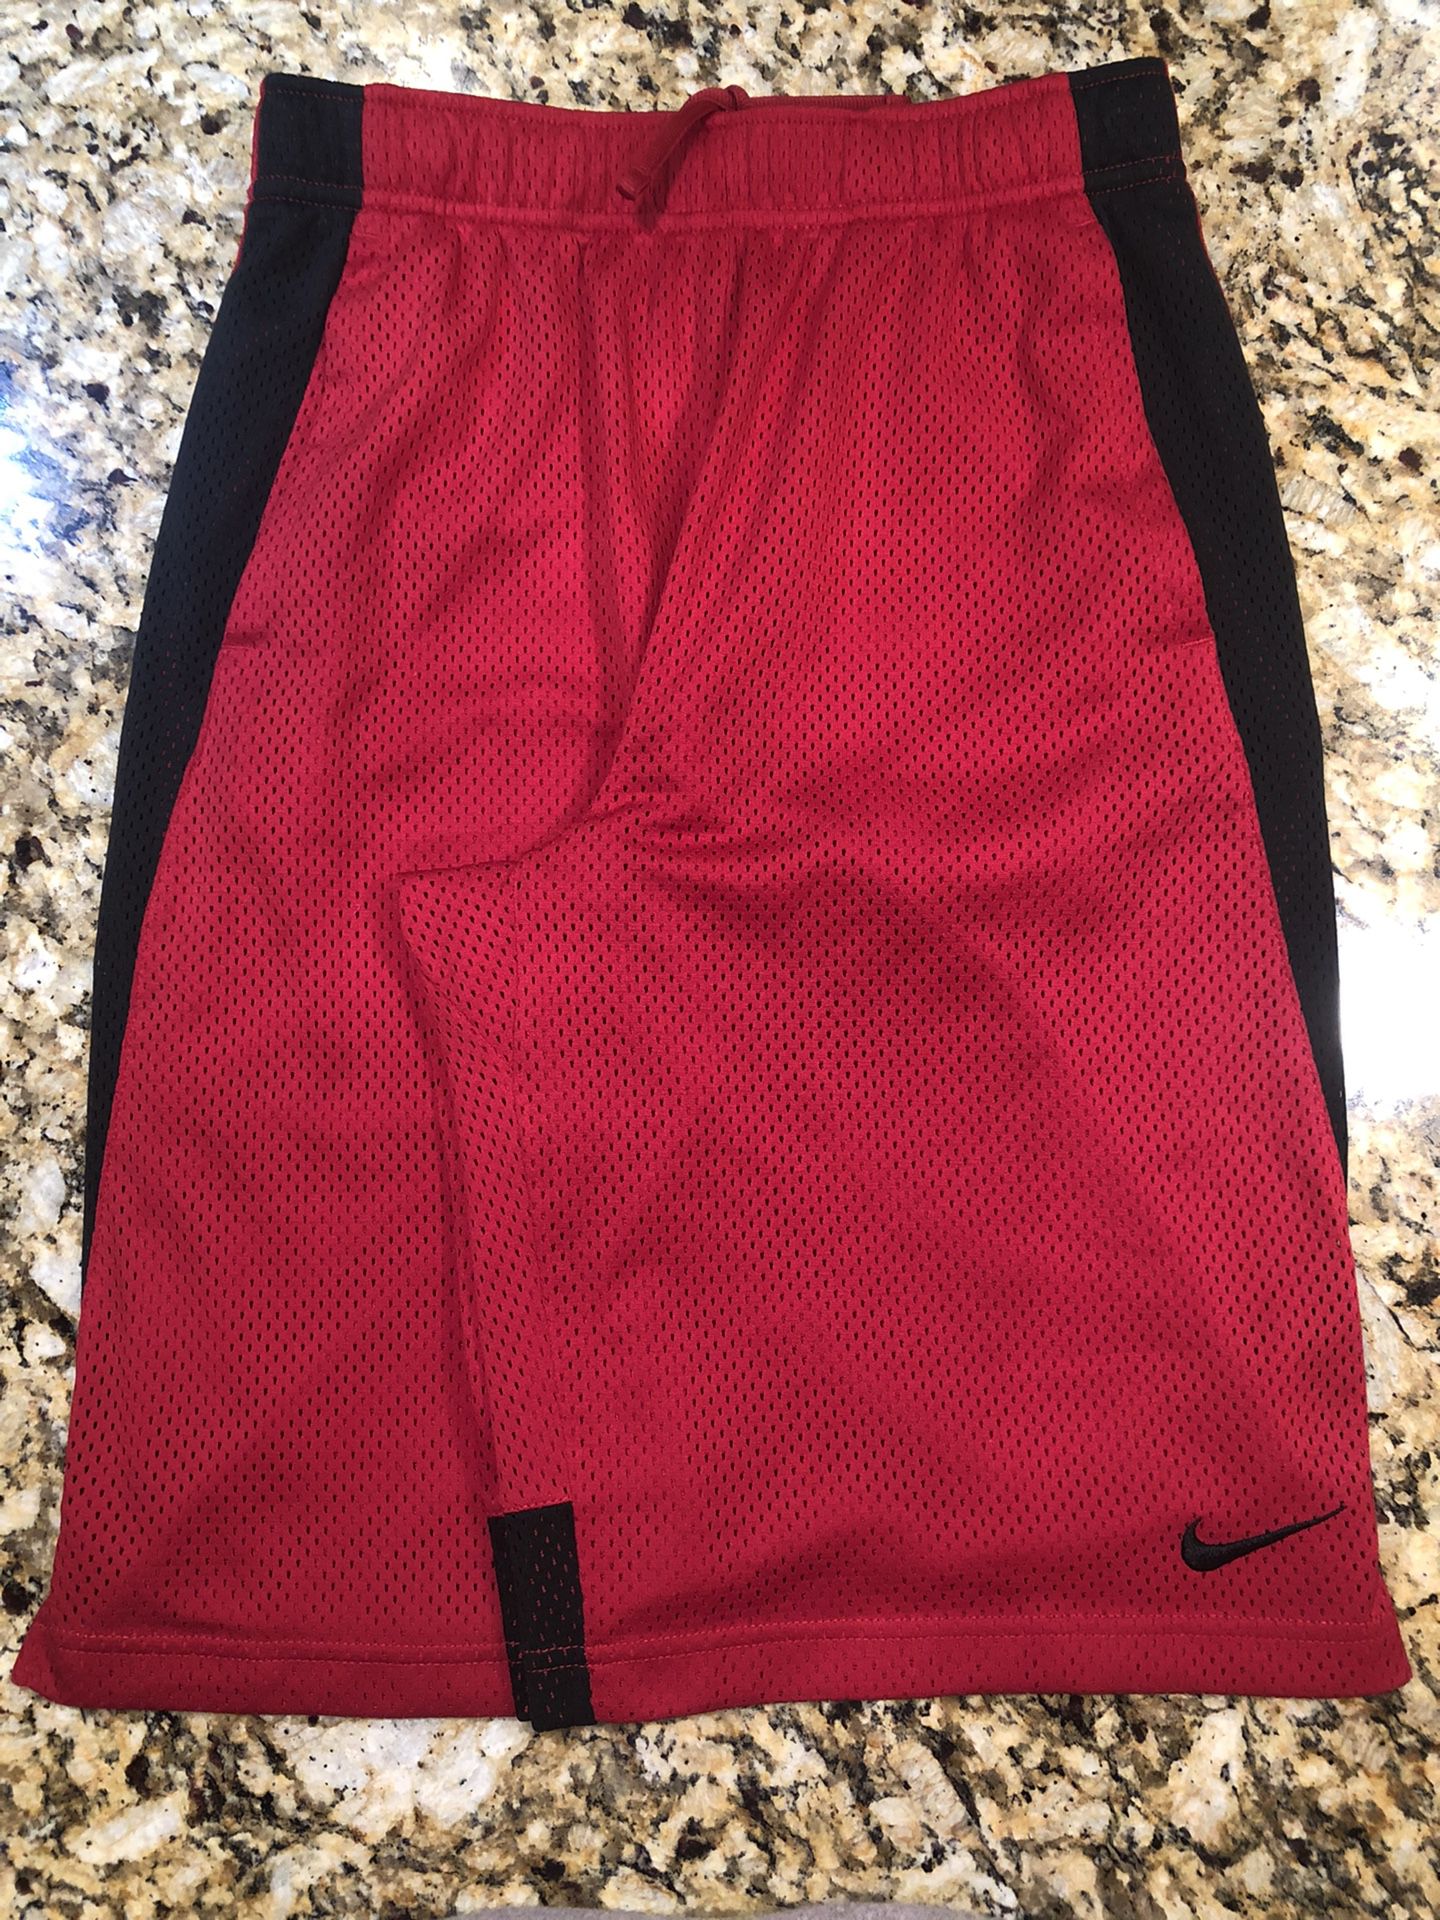 Boys Nike Shorts XL